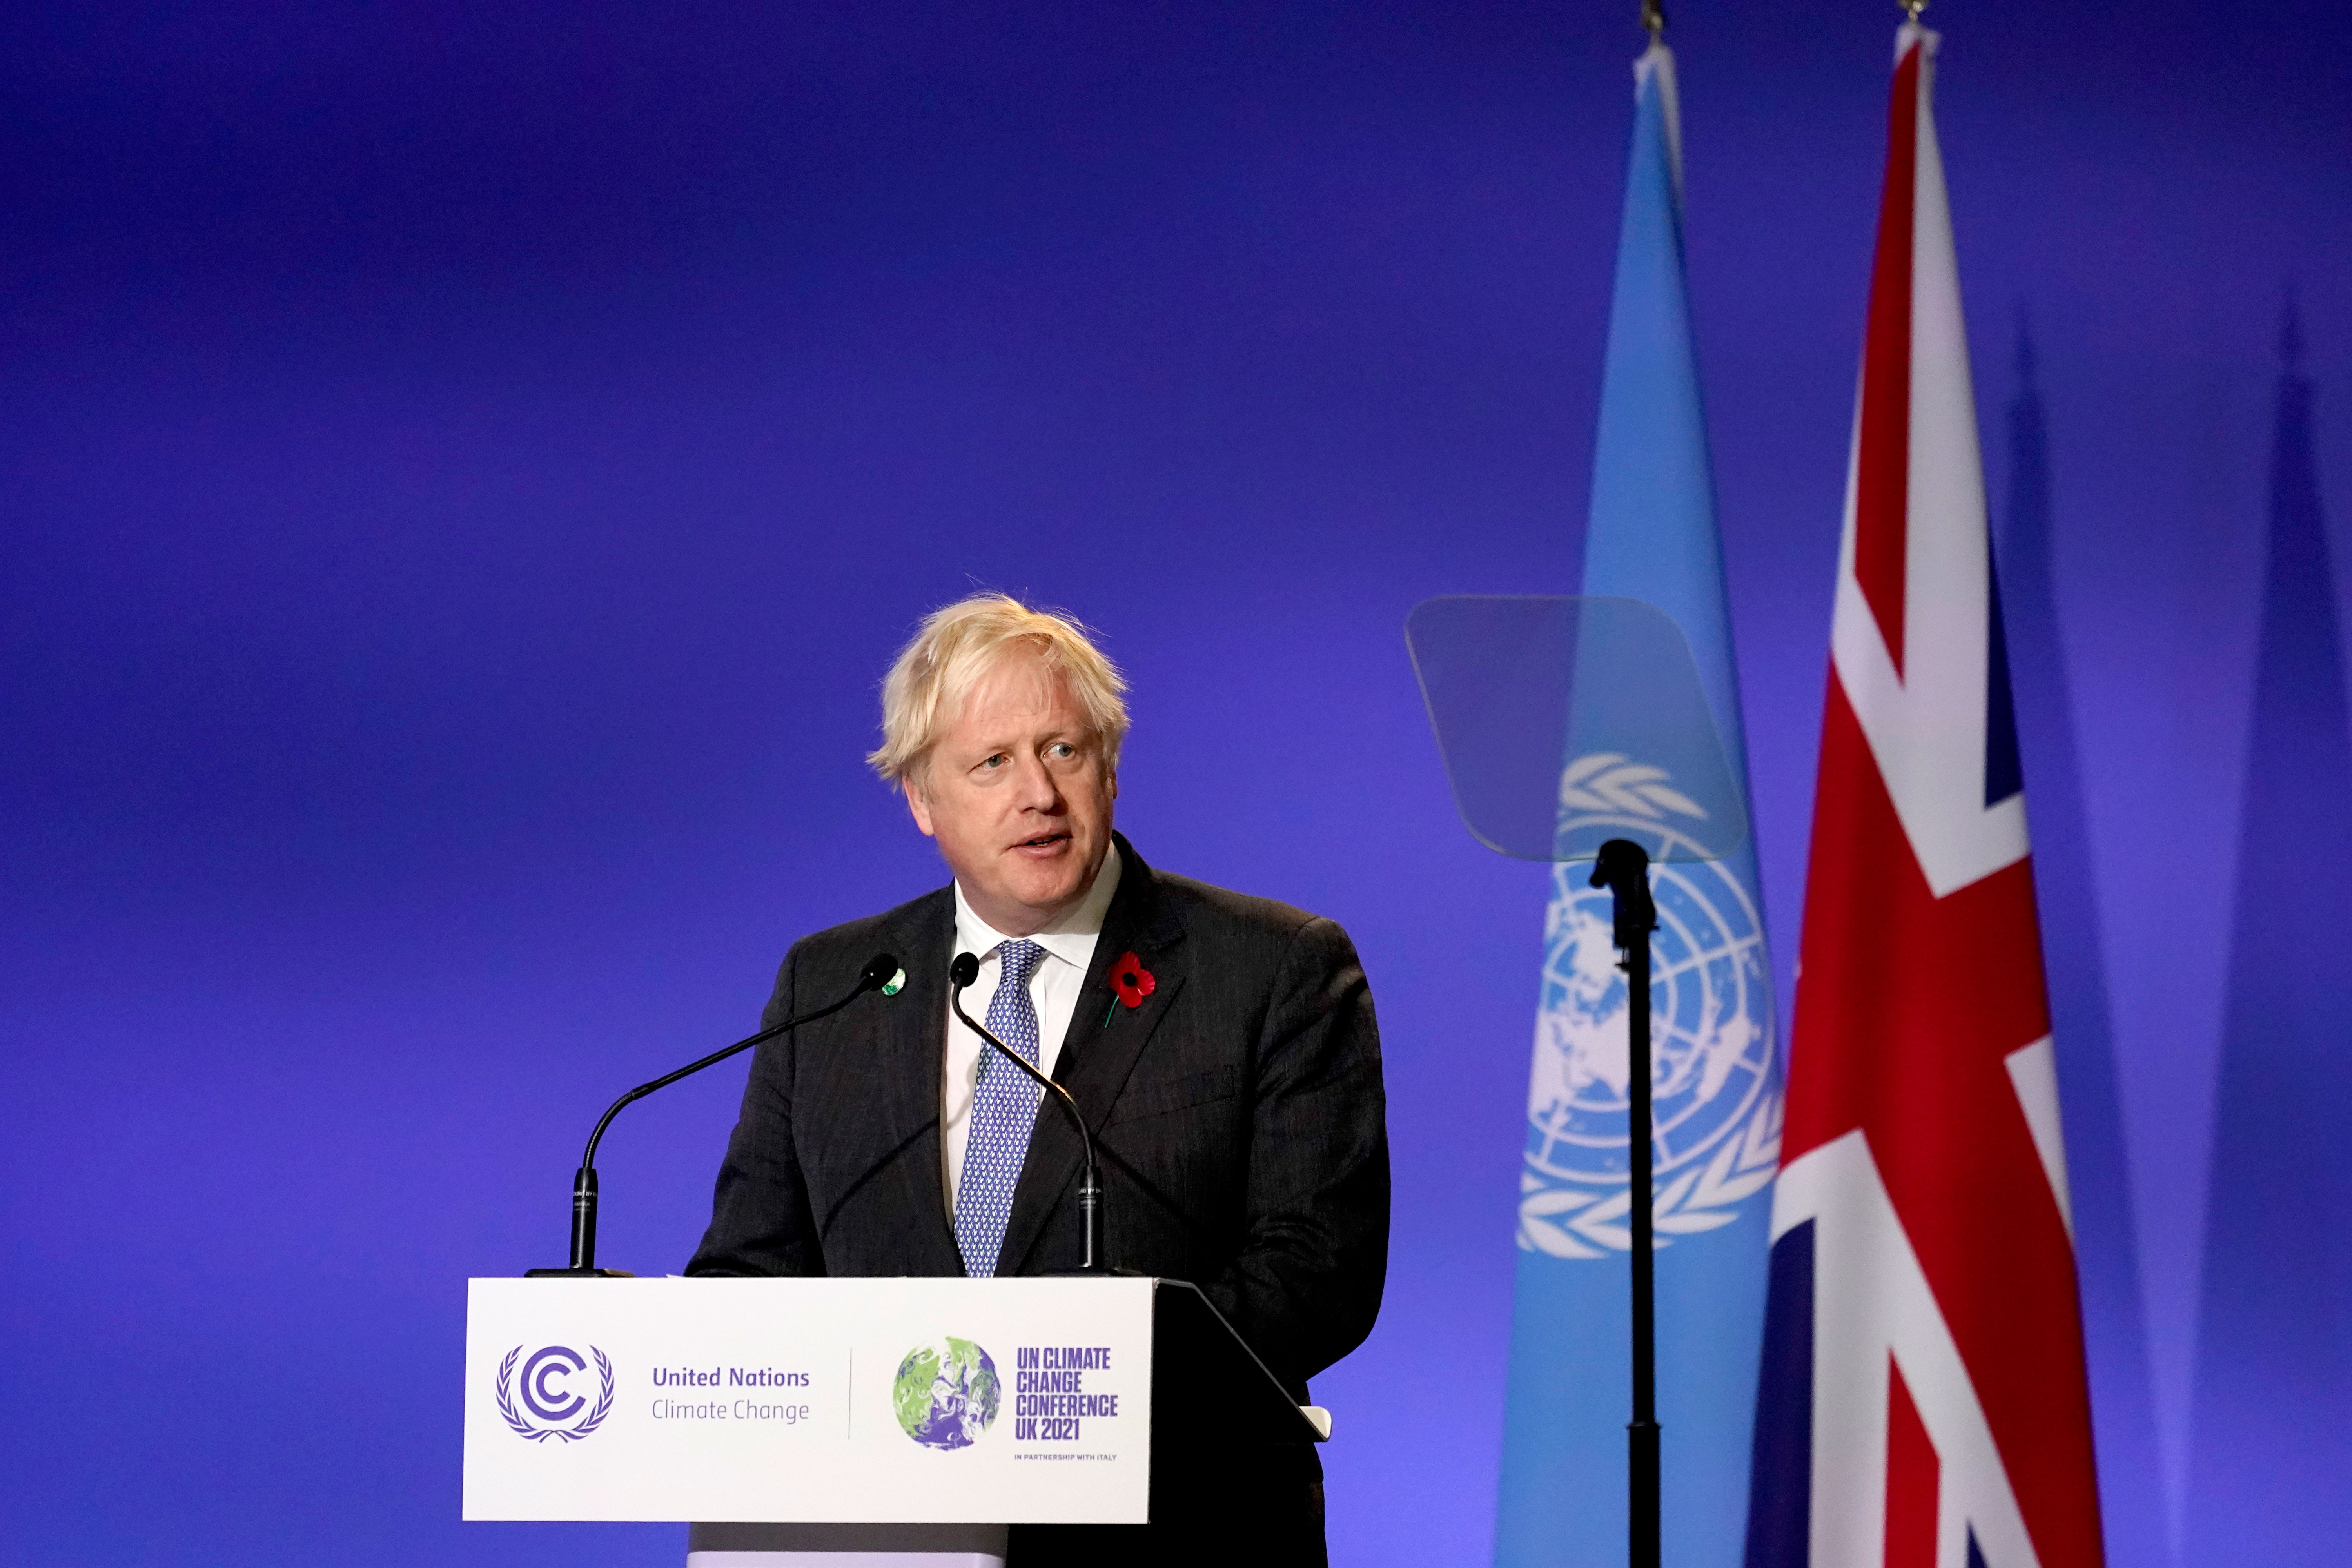 UK Prime Minister Boris Johnson speaks during the opening ceremony of COP26 in Glasgow, Scotland, on November 1.